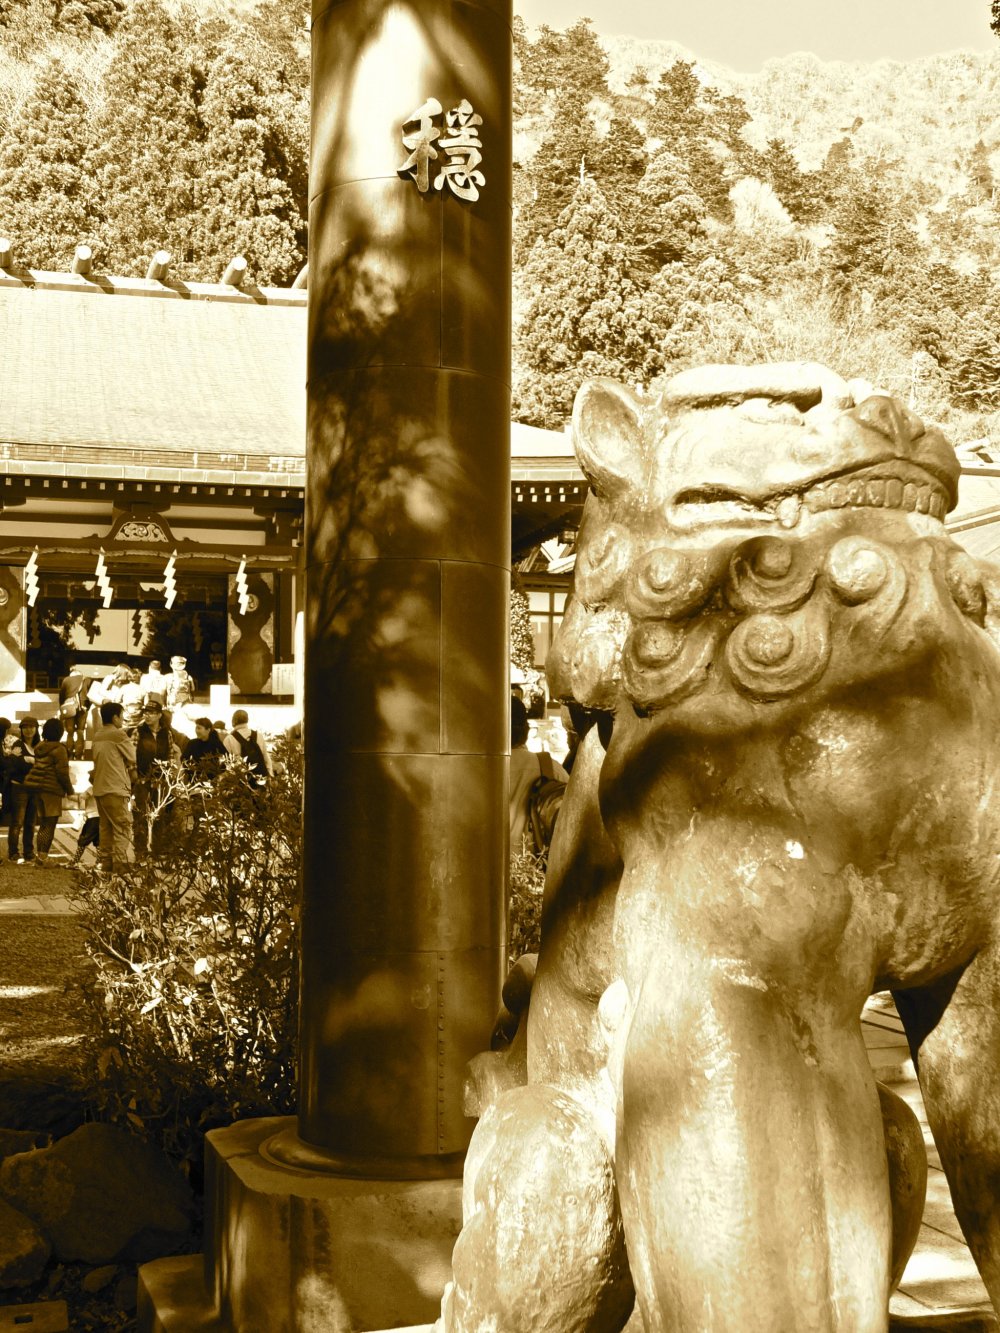 Guardian of the shrine gates